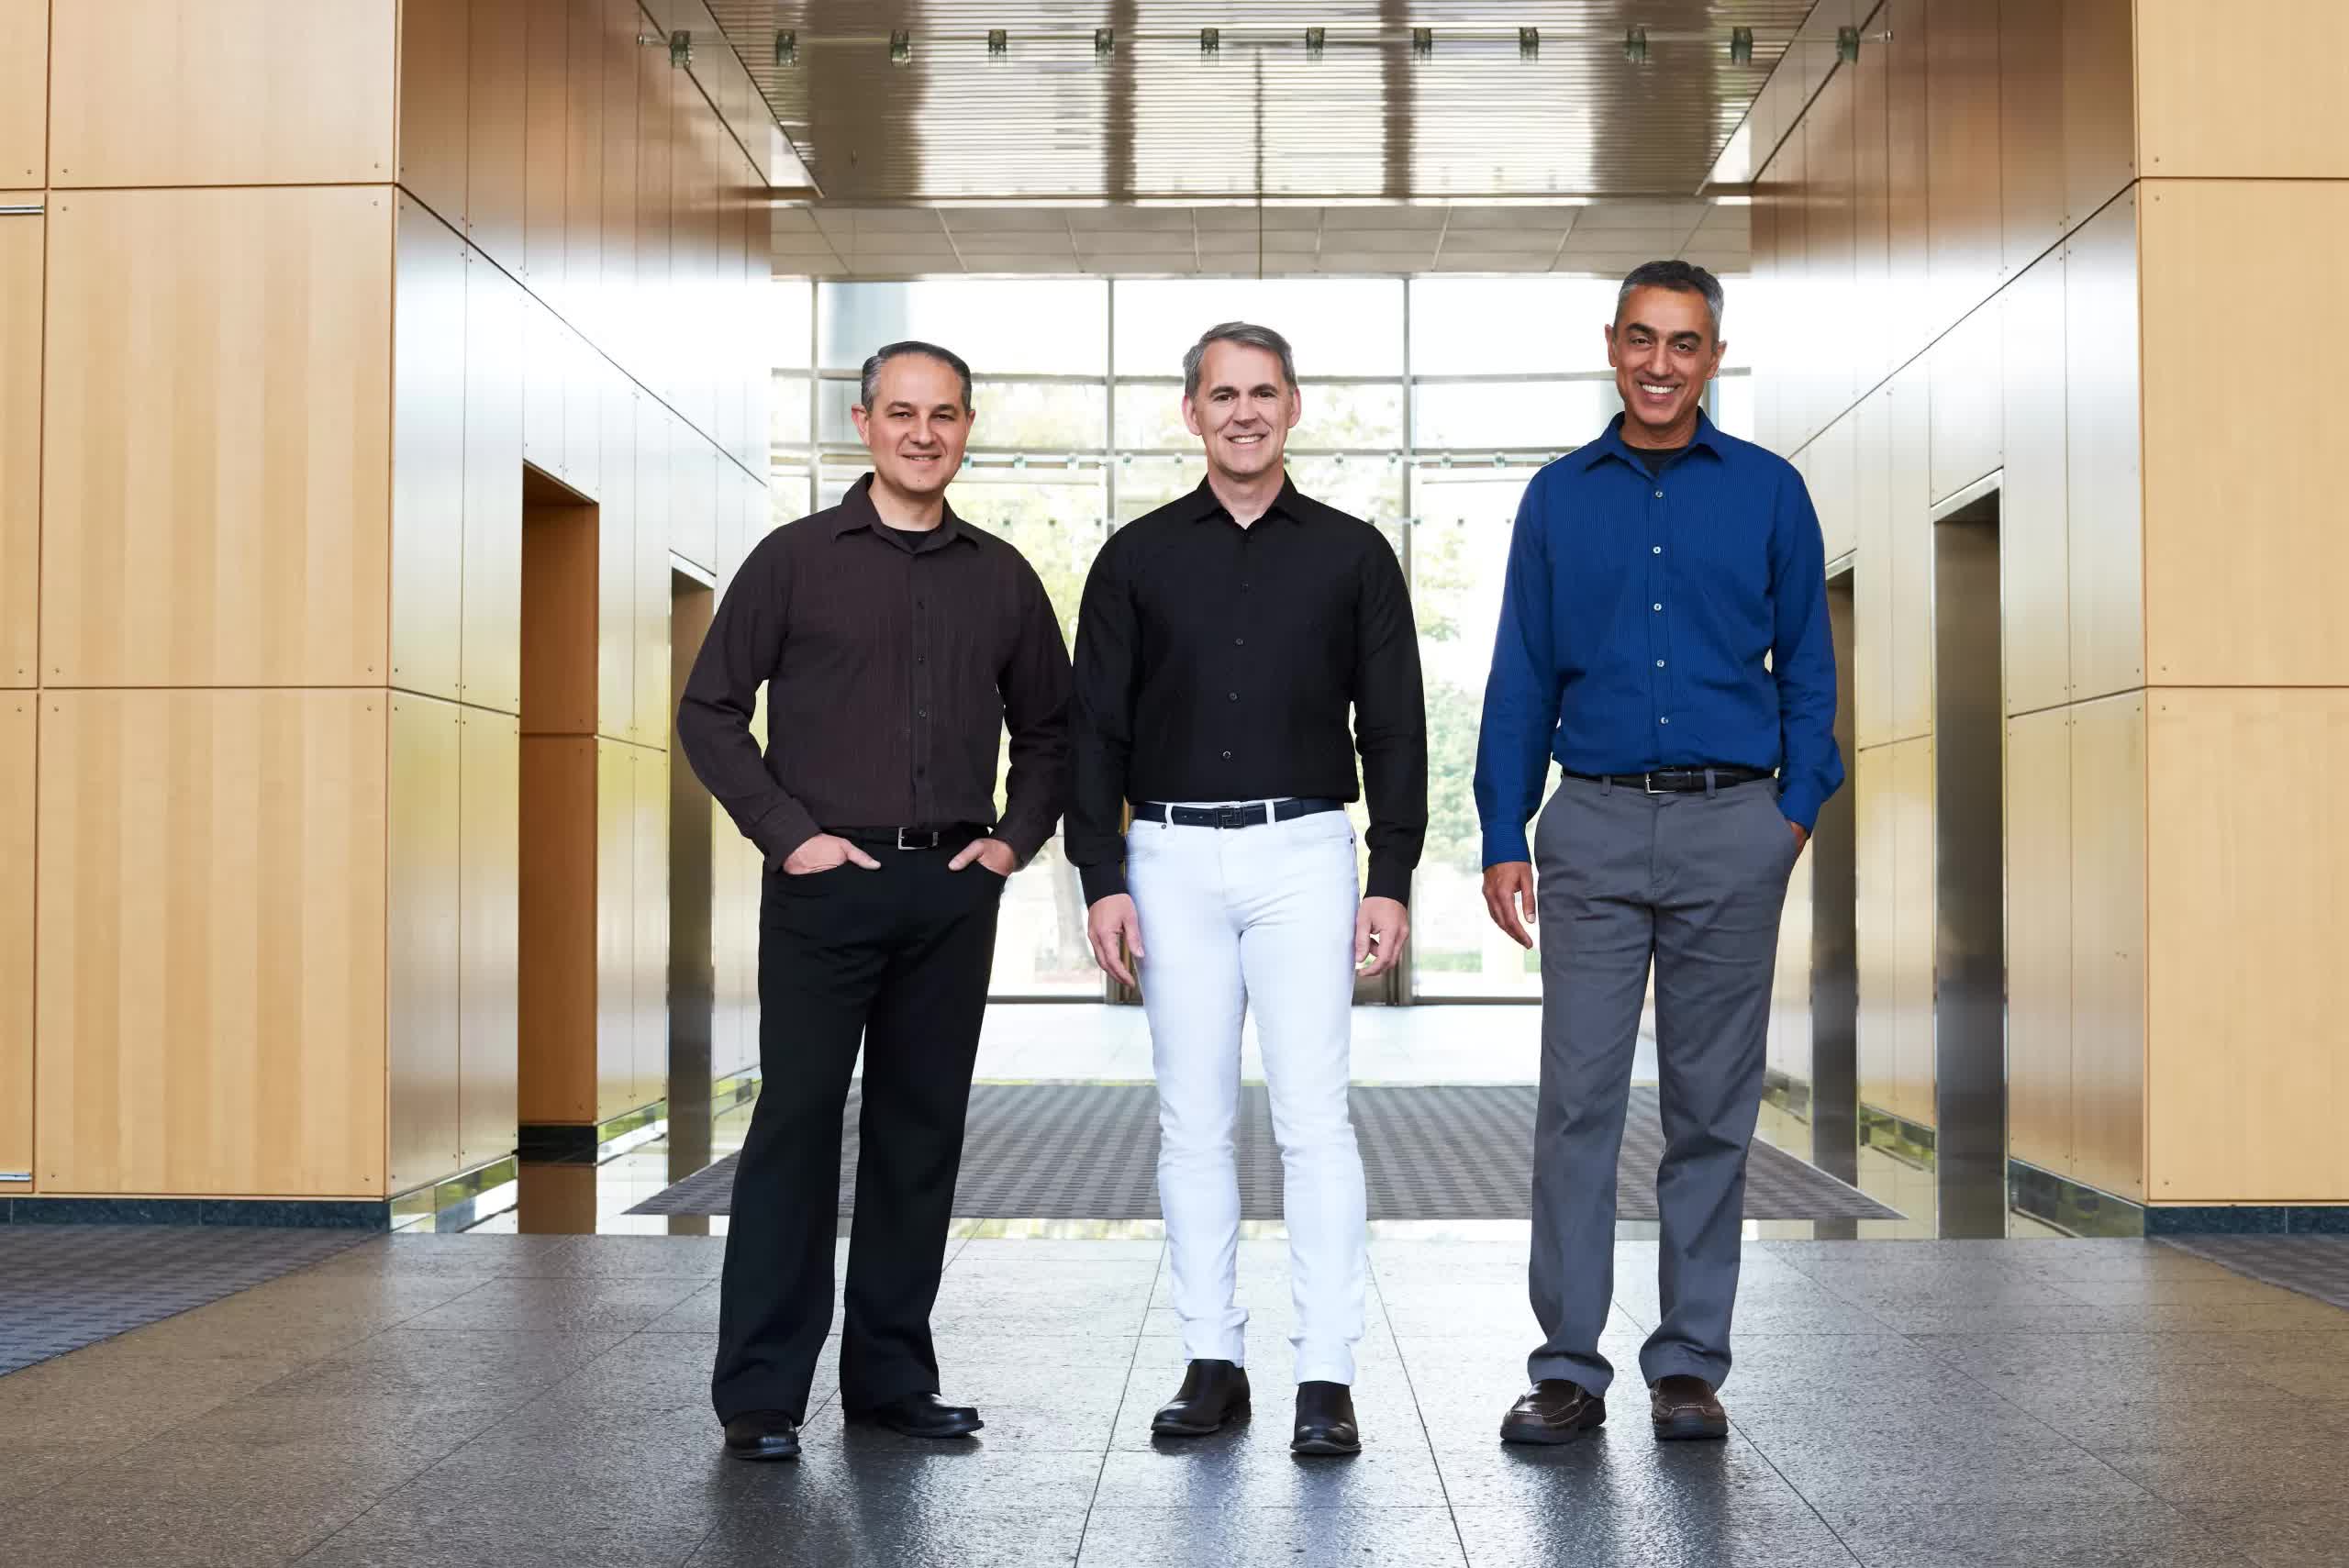 Qualcomm acquires chip startup Nuvia for $1.4 billion